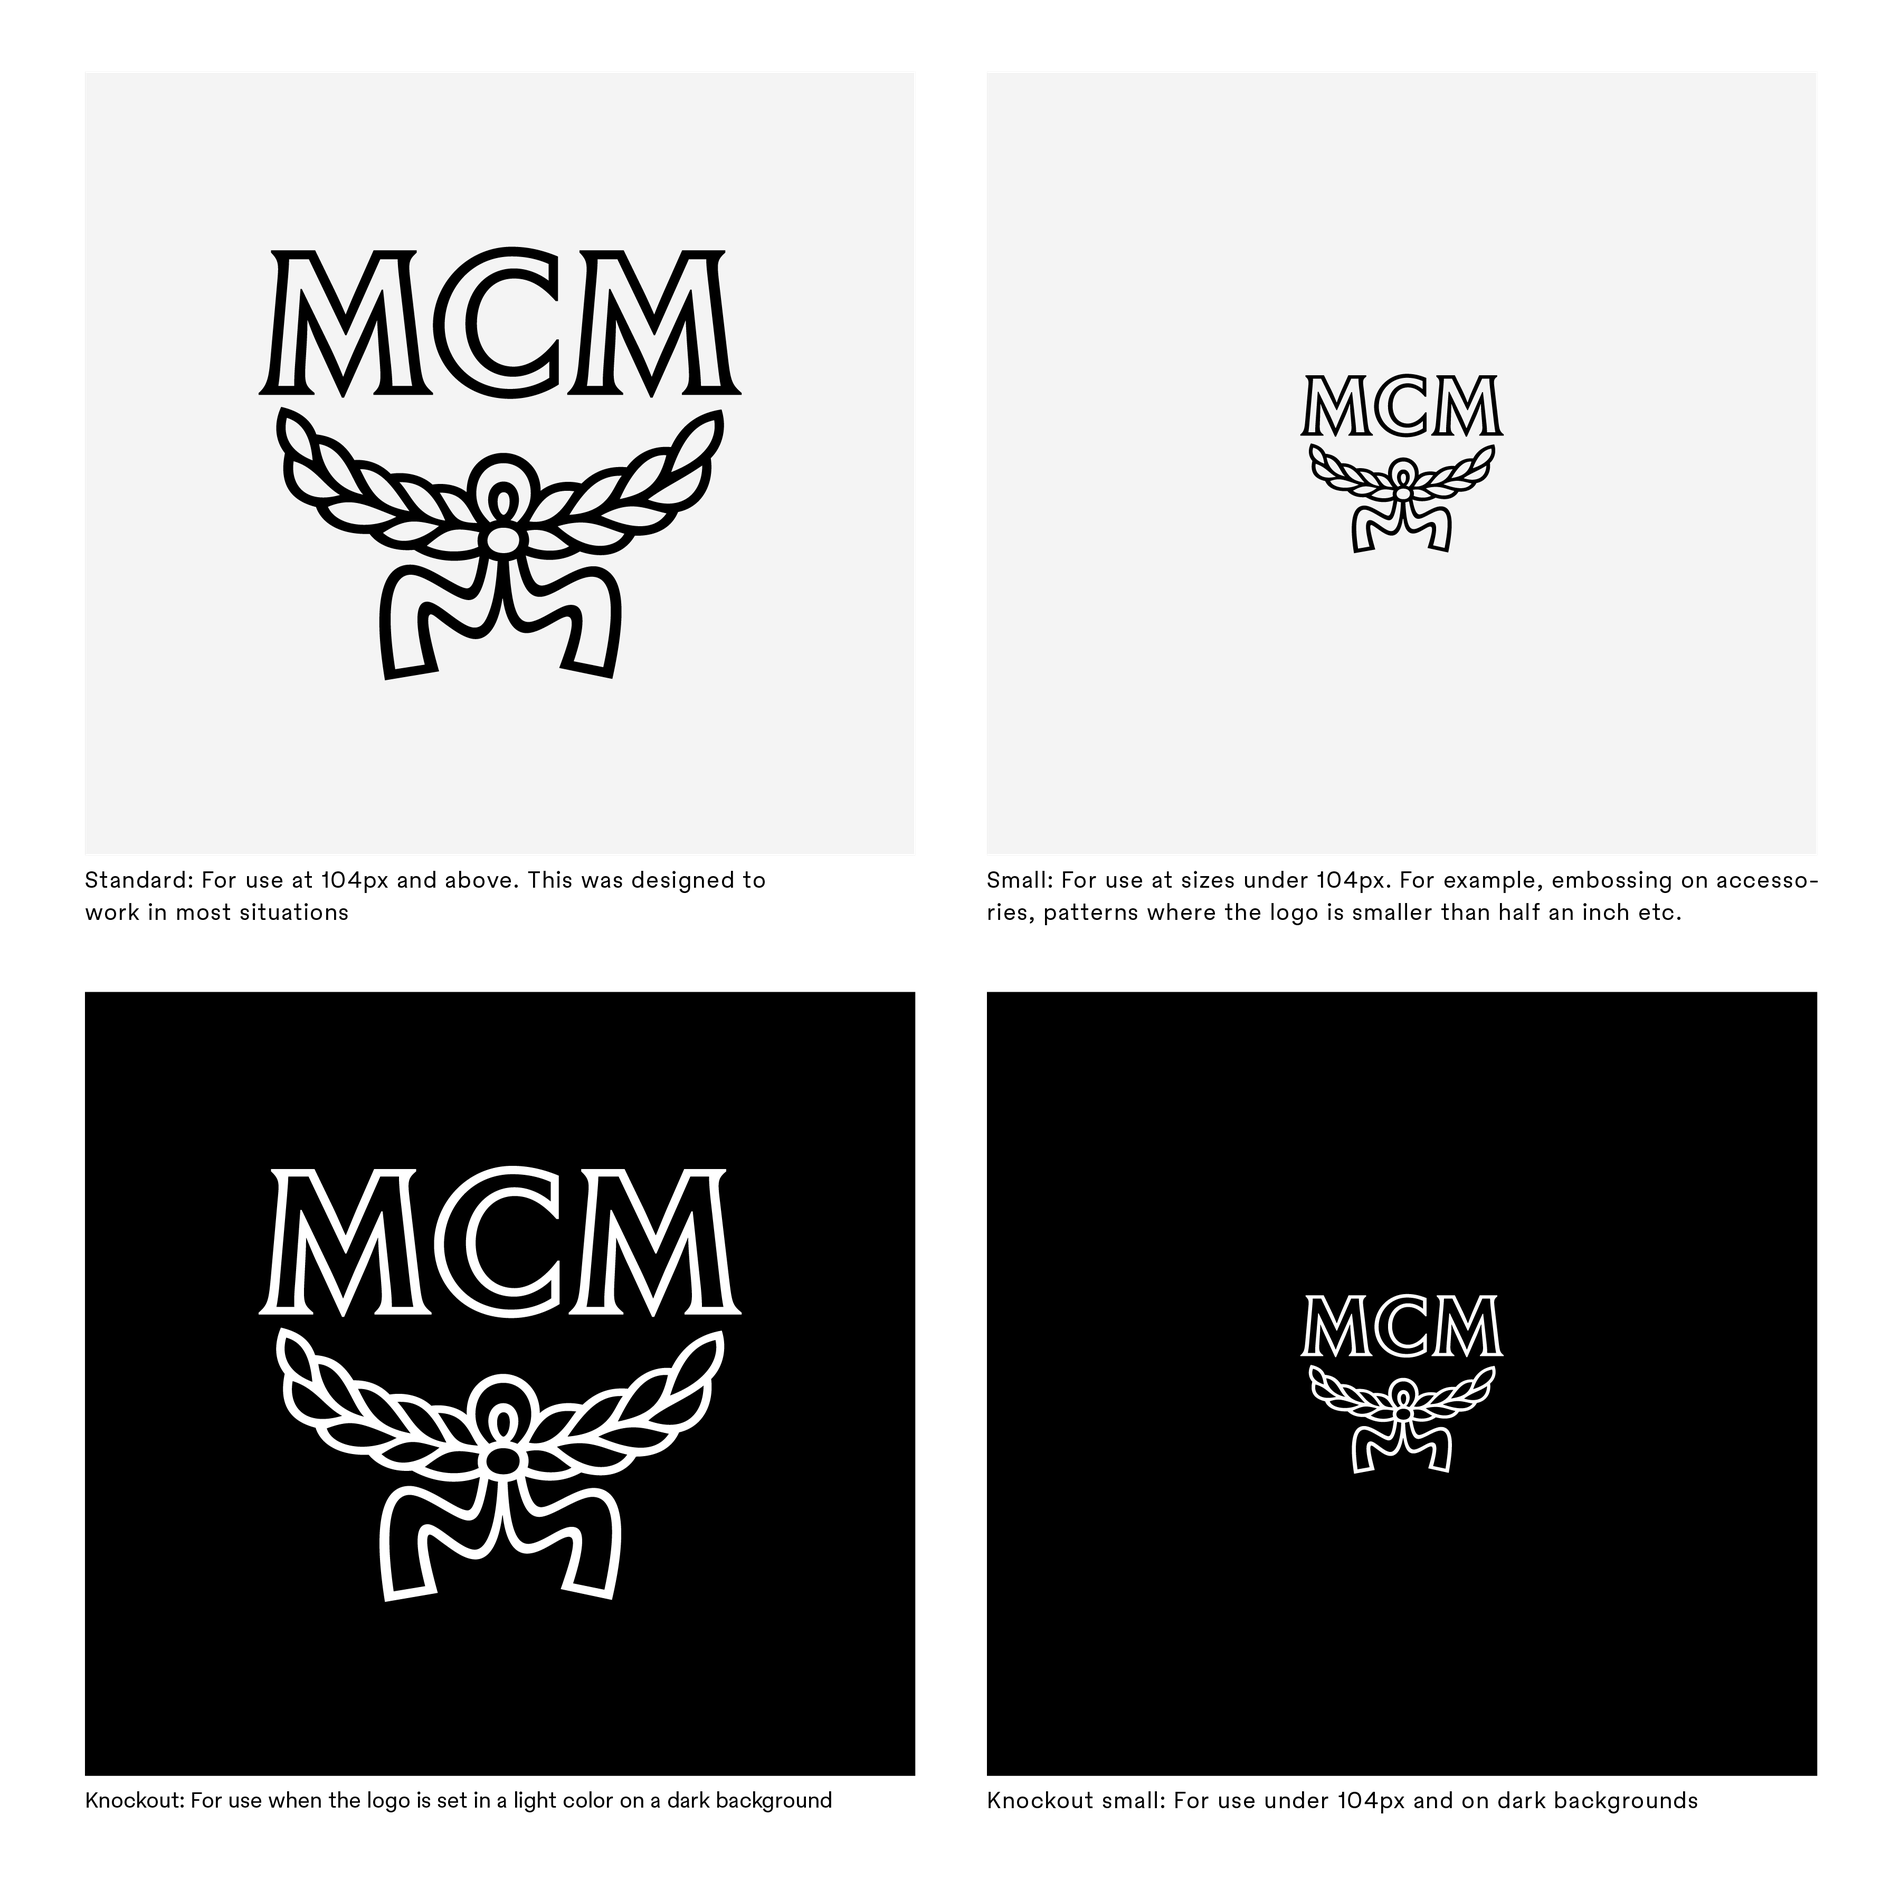 MCM Logotype Refresh